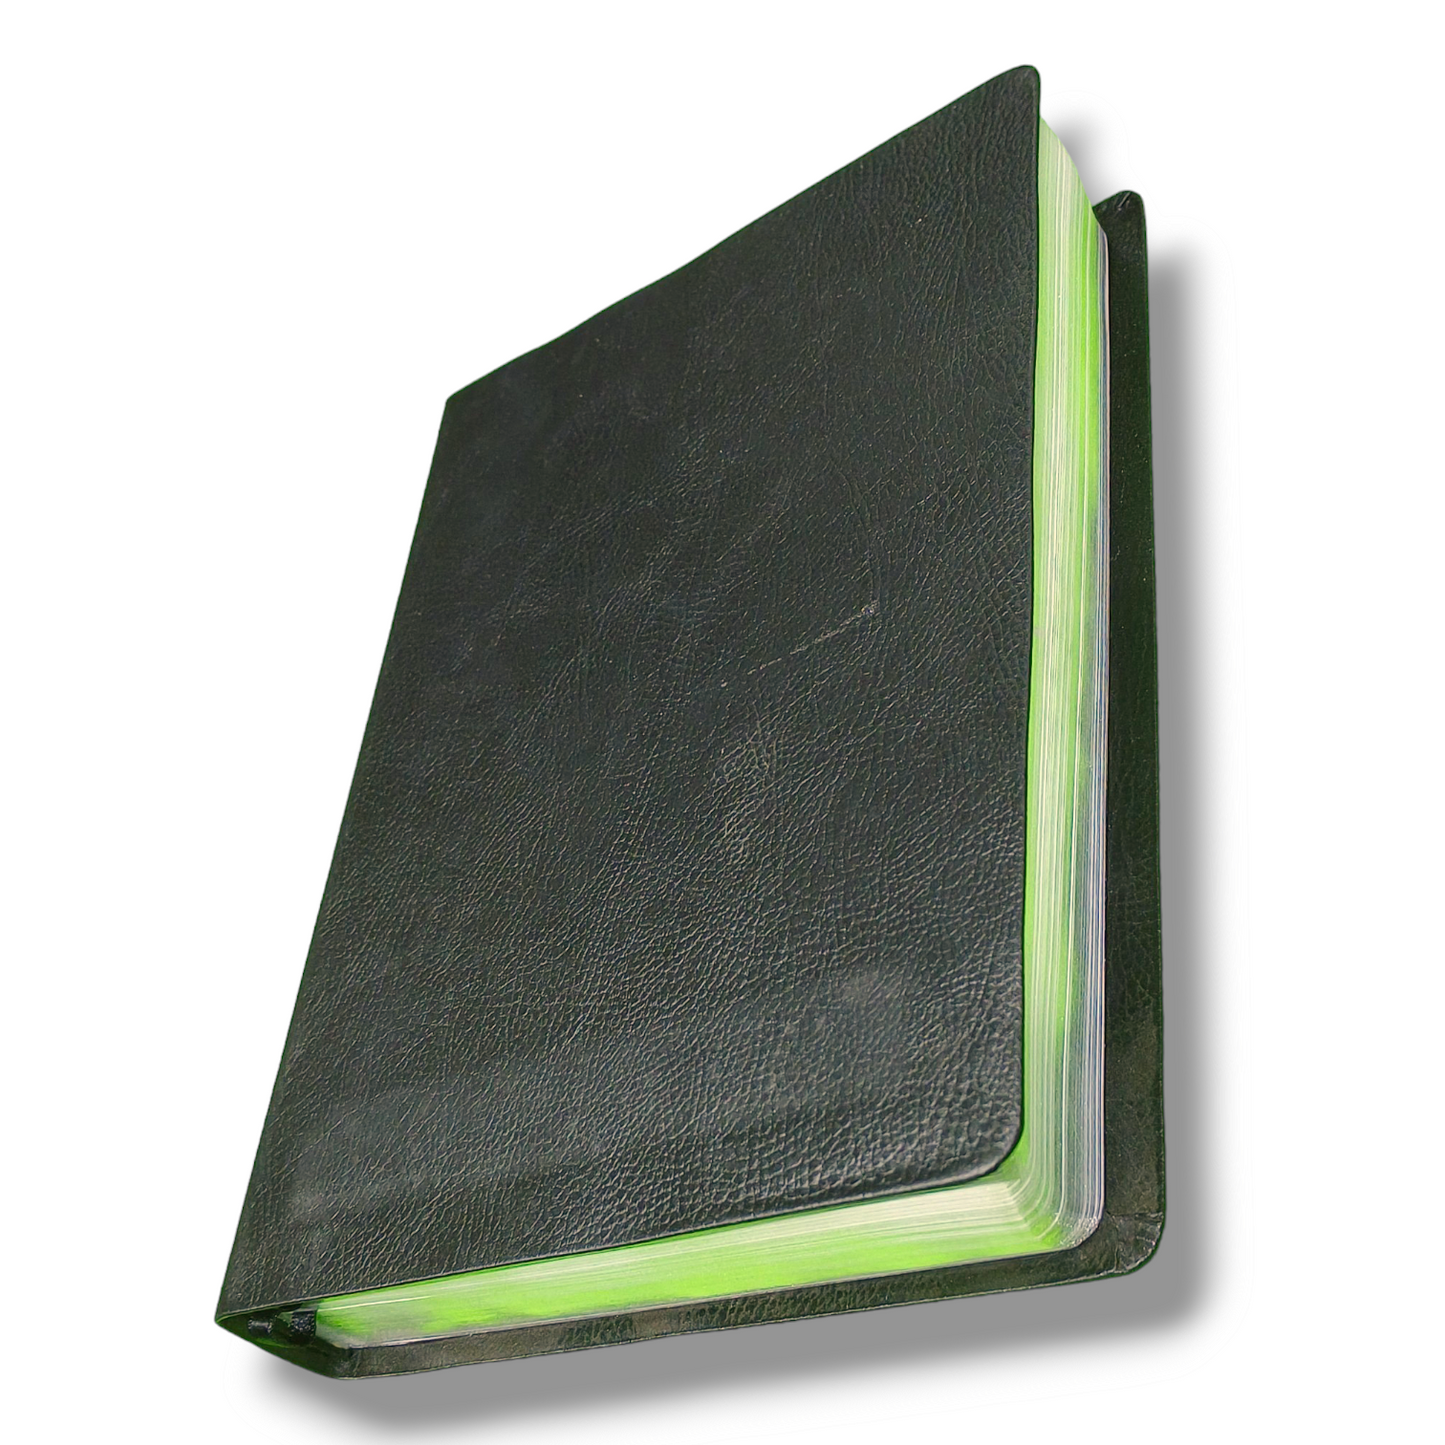 Life Essentials Study Bible | New Edition | Black Imitation Leather